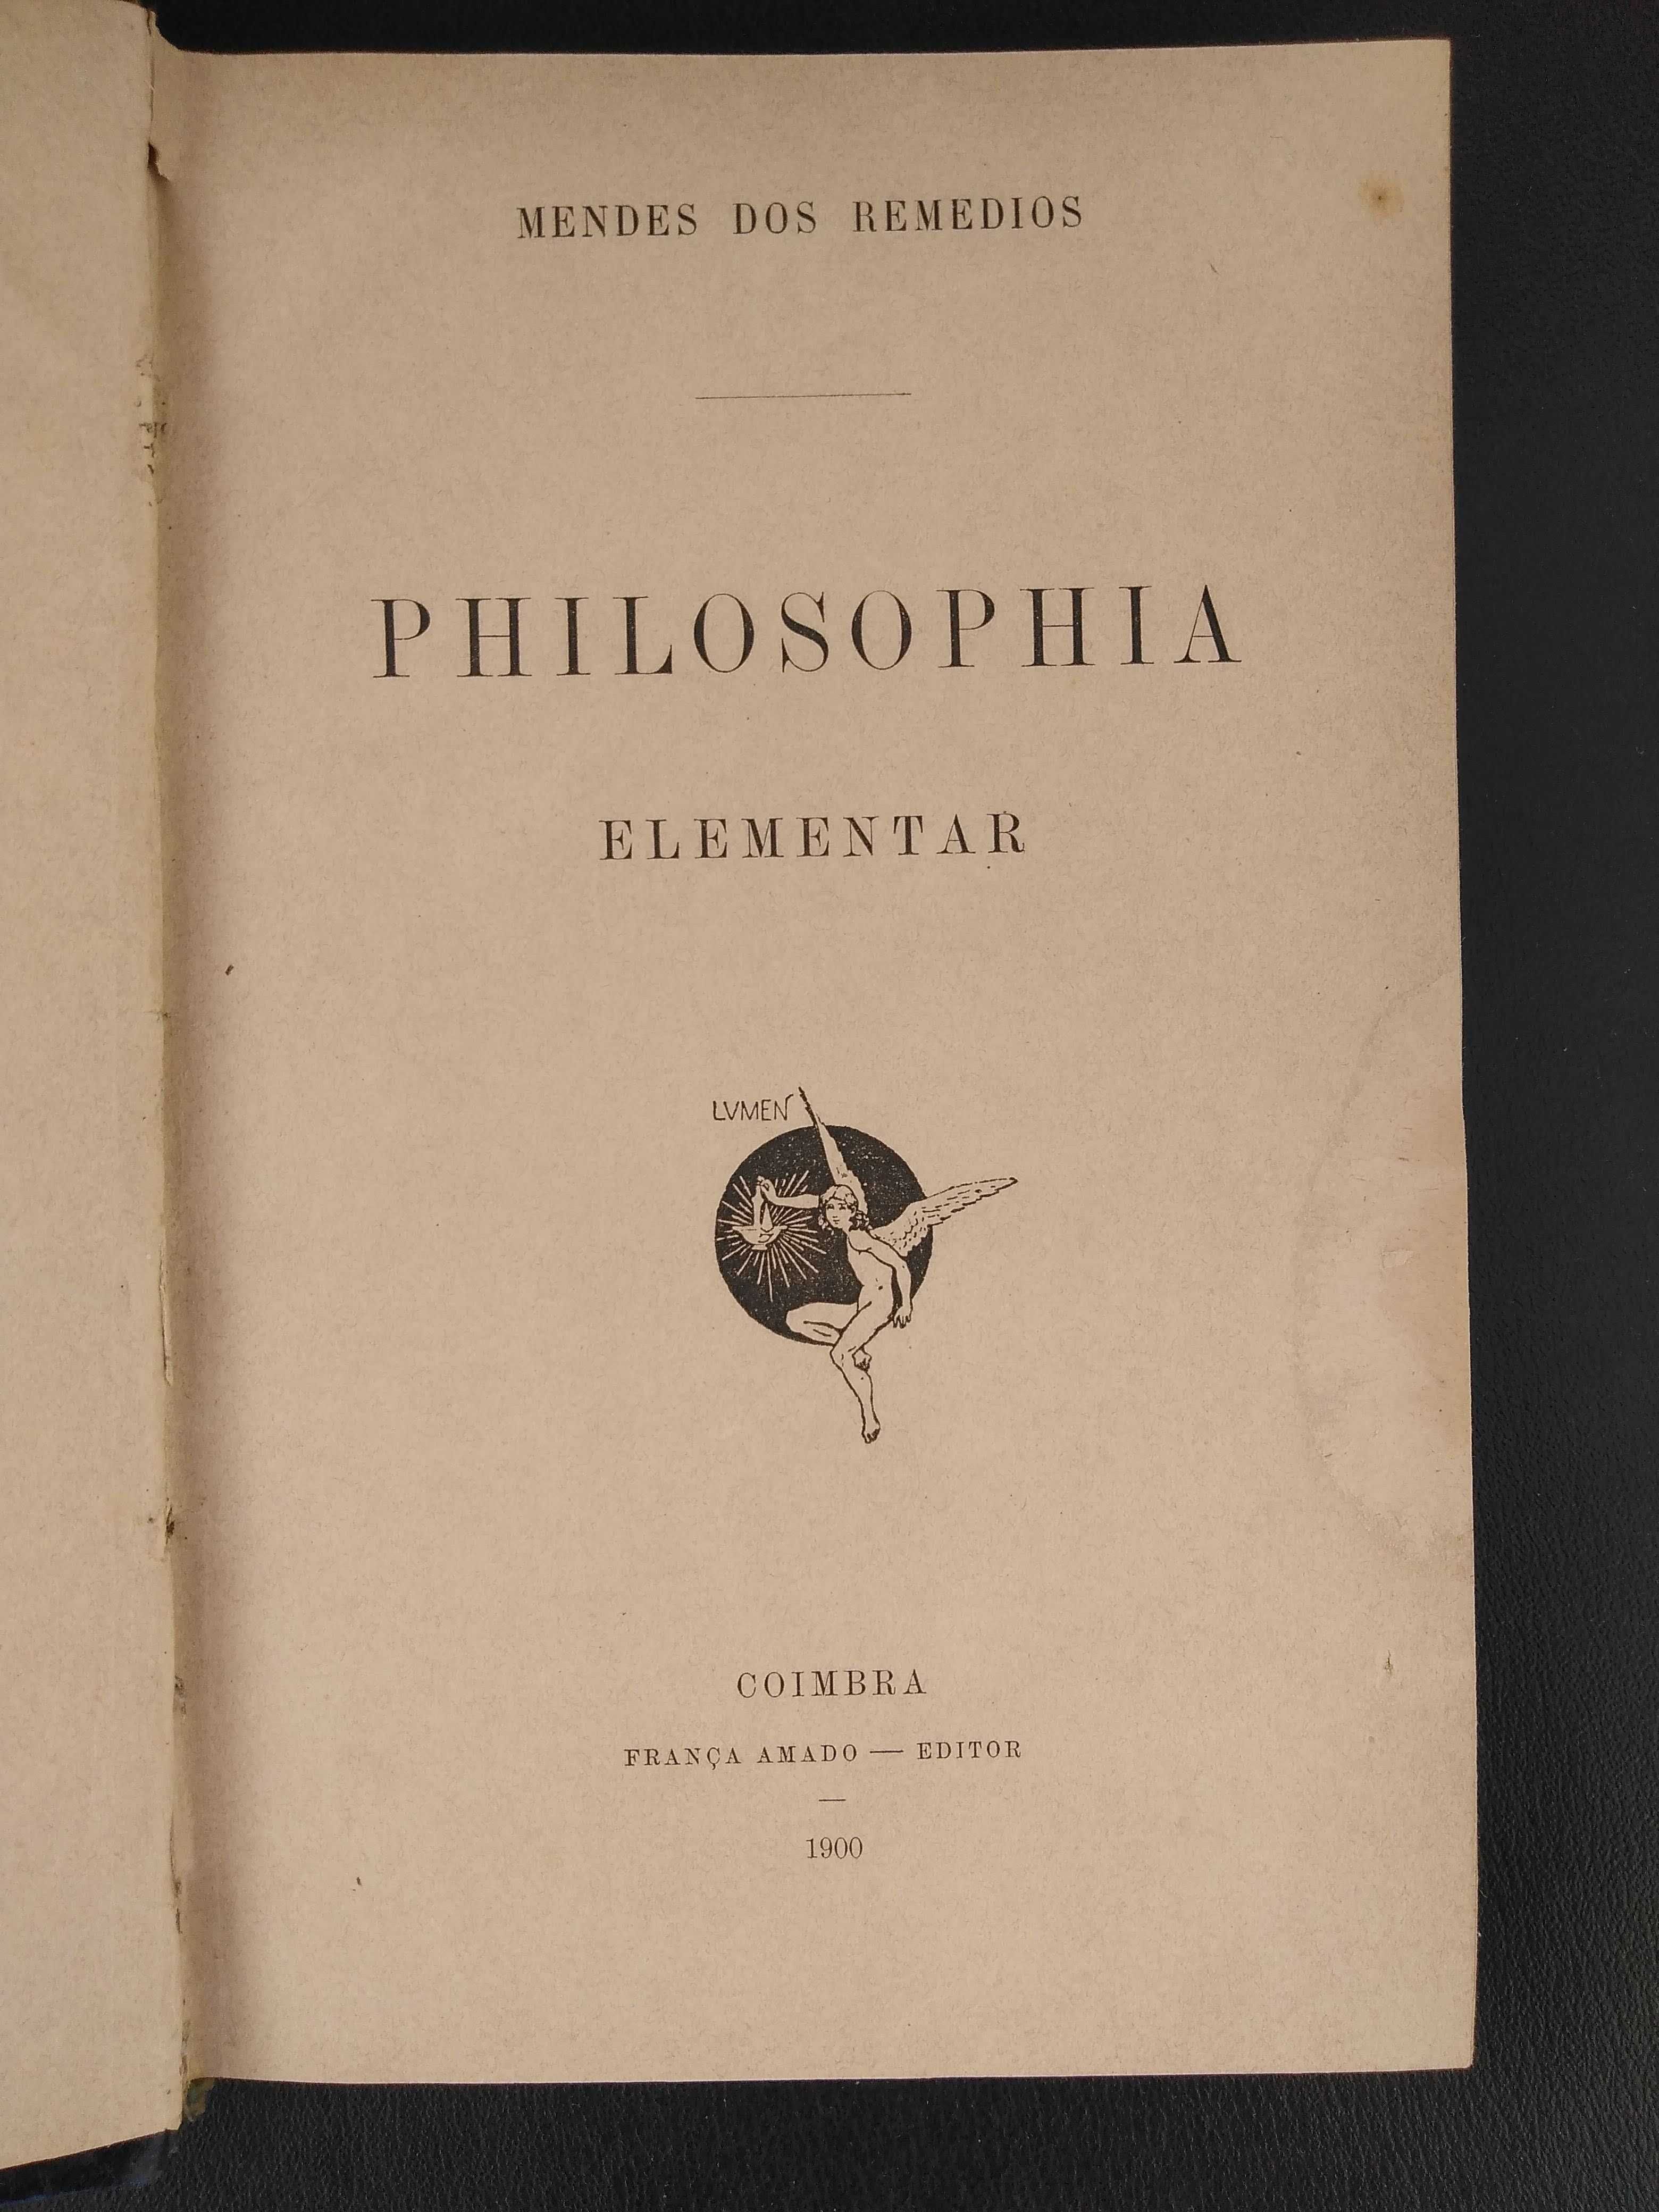 livro: Mendes dos Remedios "Philosophia elementar", 1900